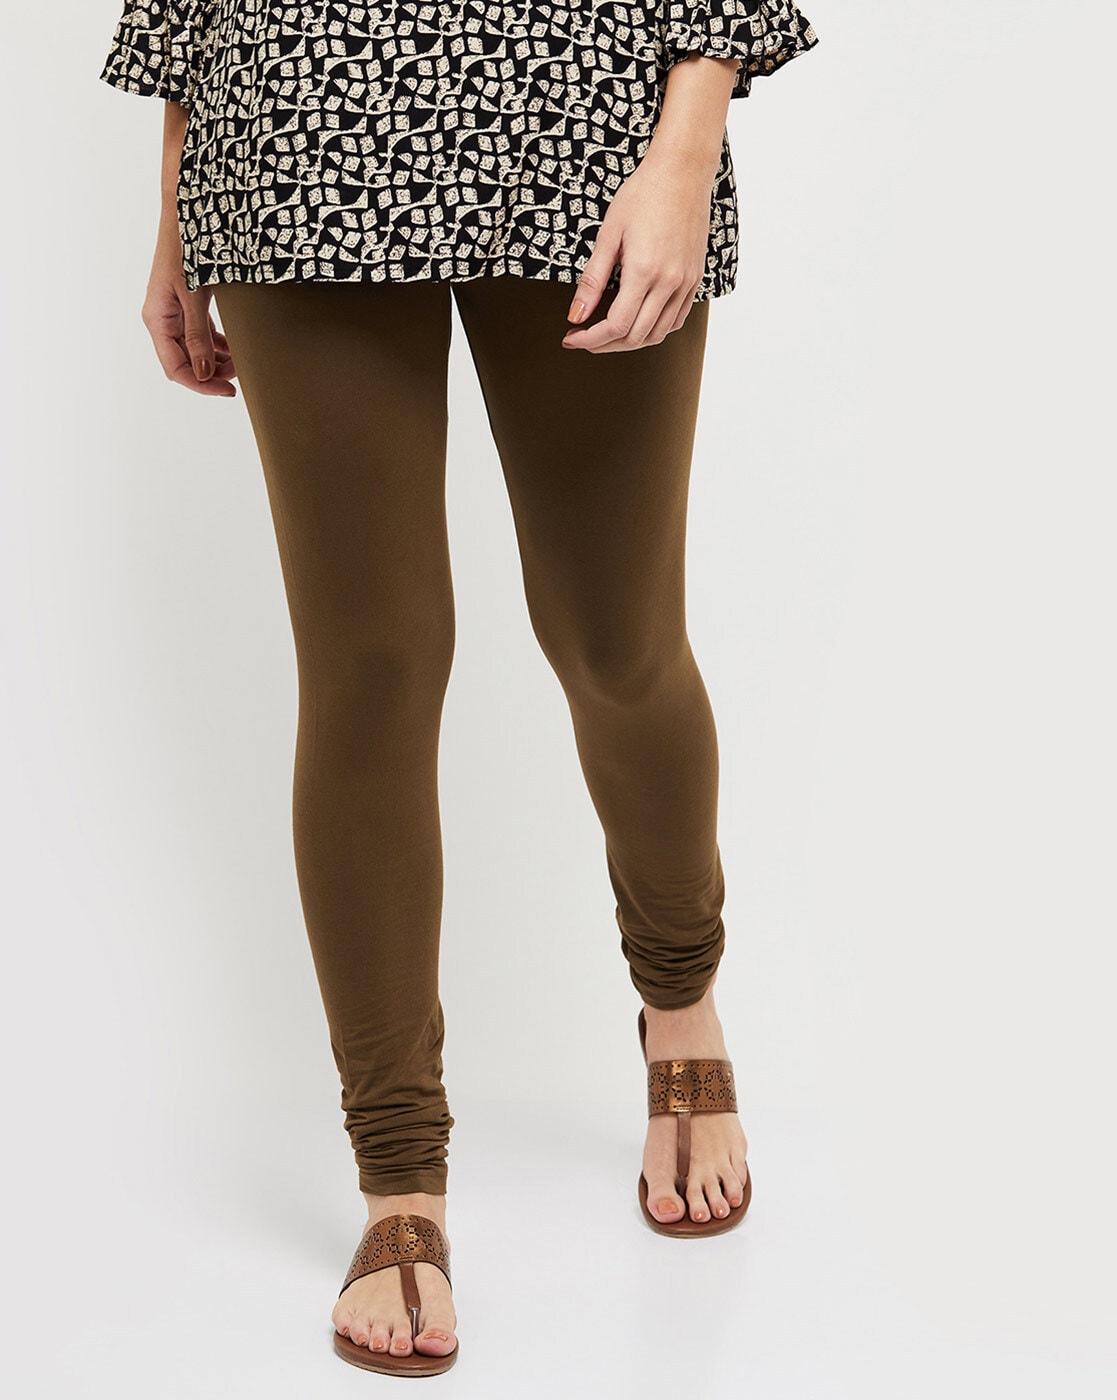 Dropship Generic Women's Cotton Leggings (Color:Light Brown)-PID37618